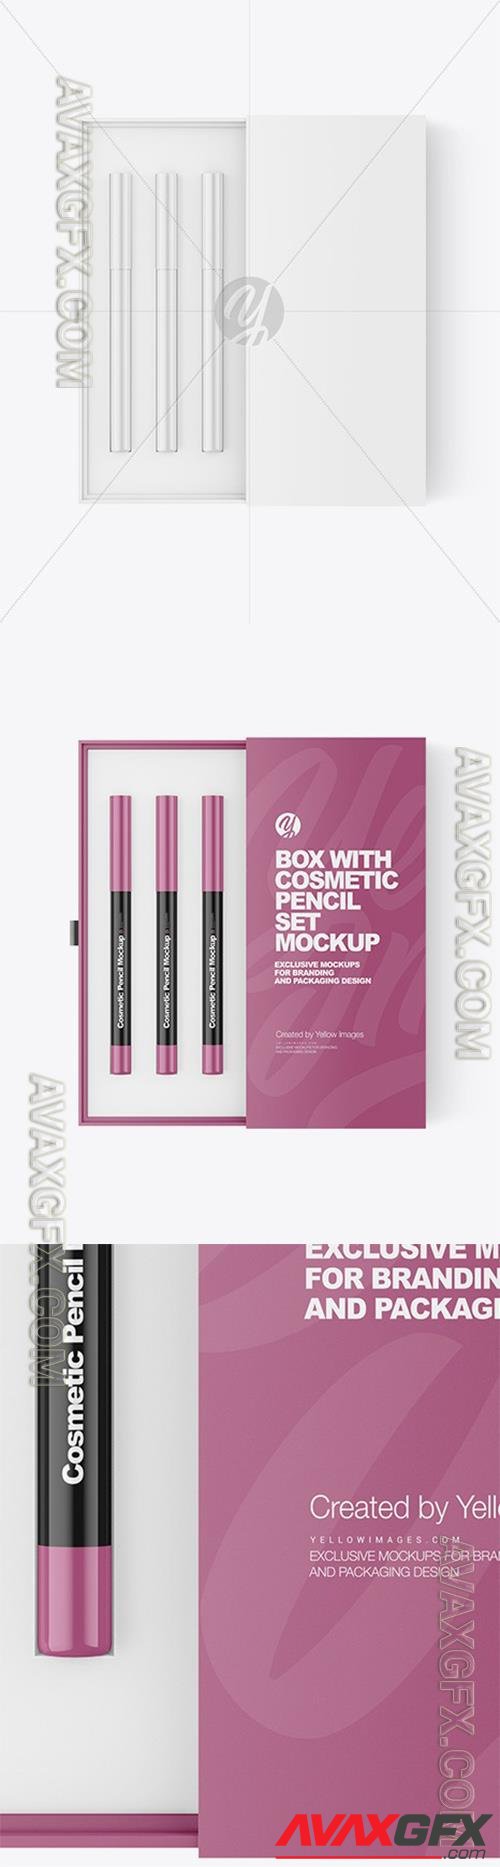 Box with Cosmetic Pencil Set Mockup 95504 TIF